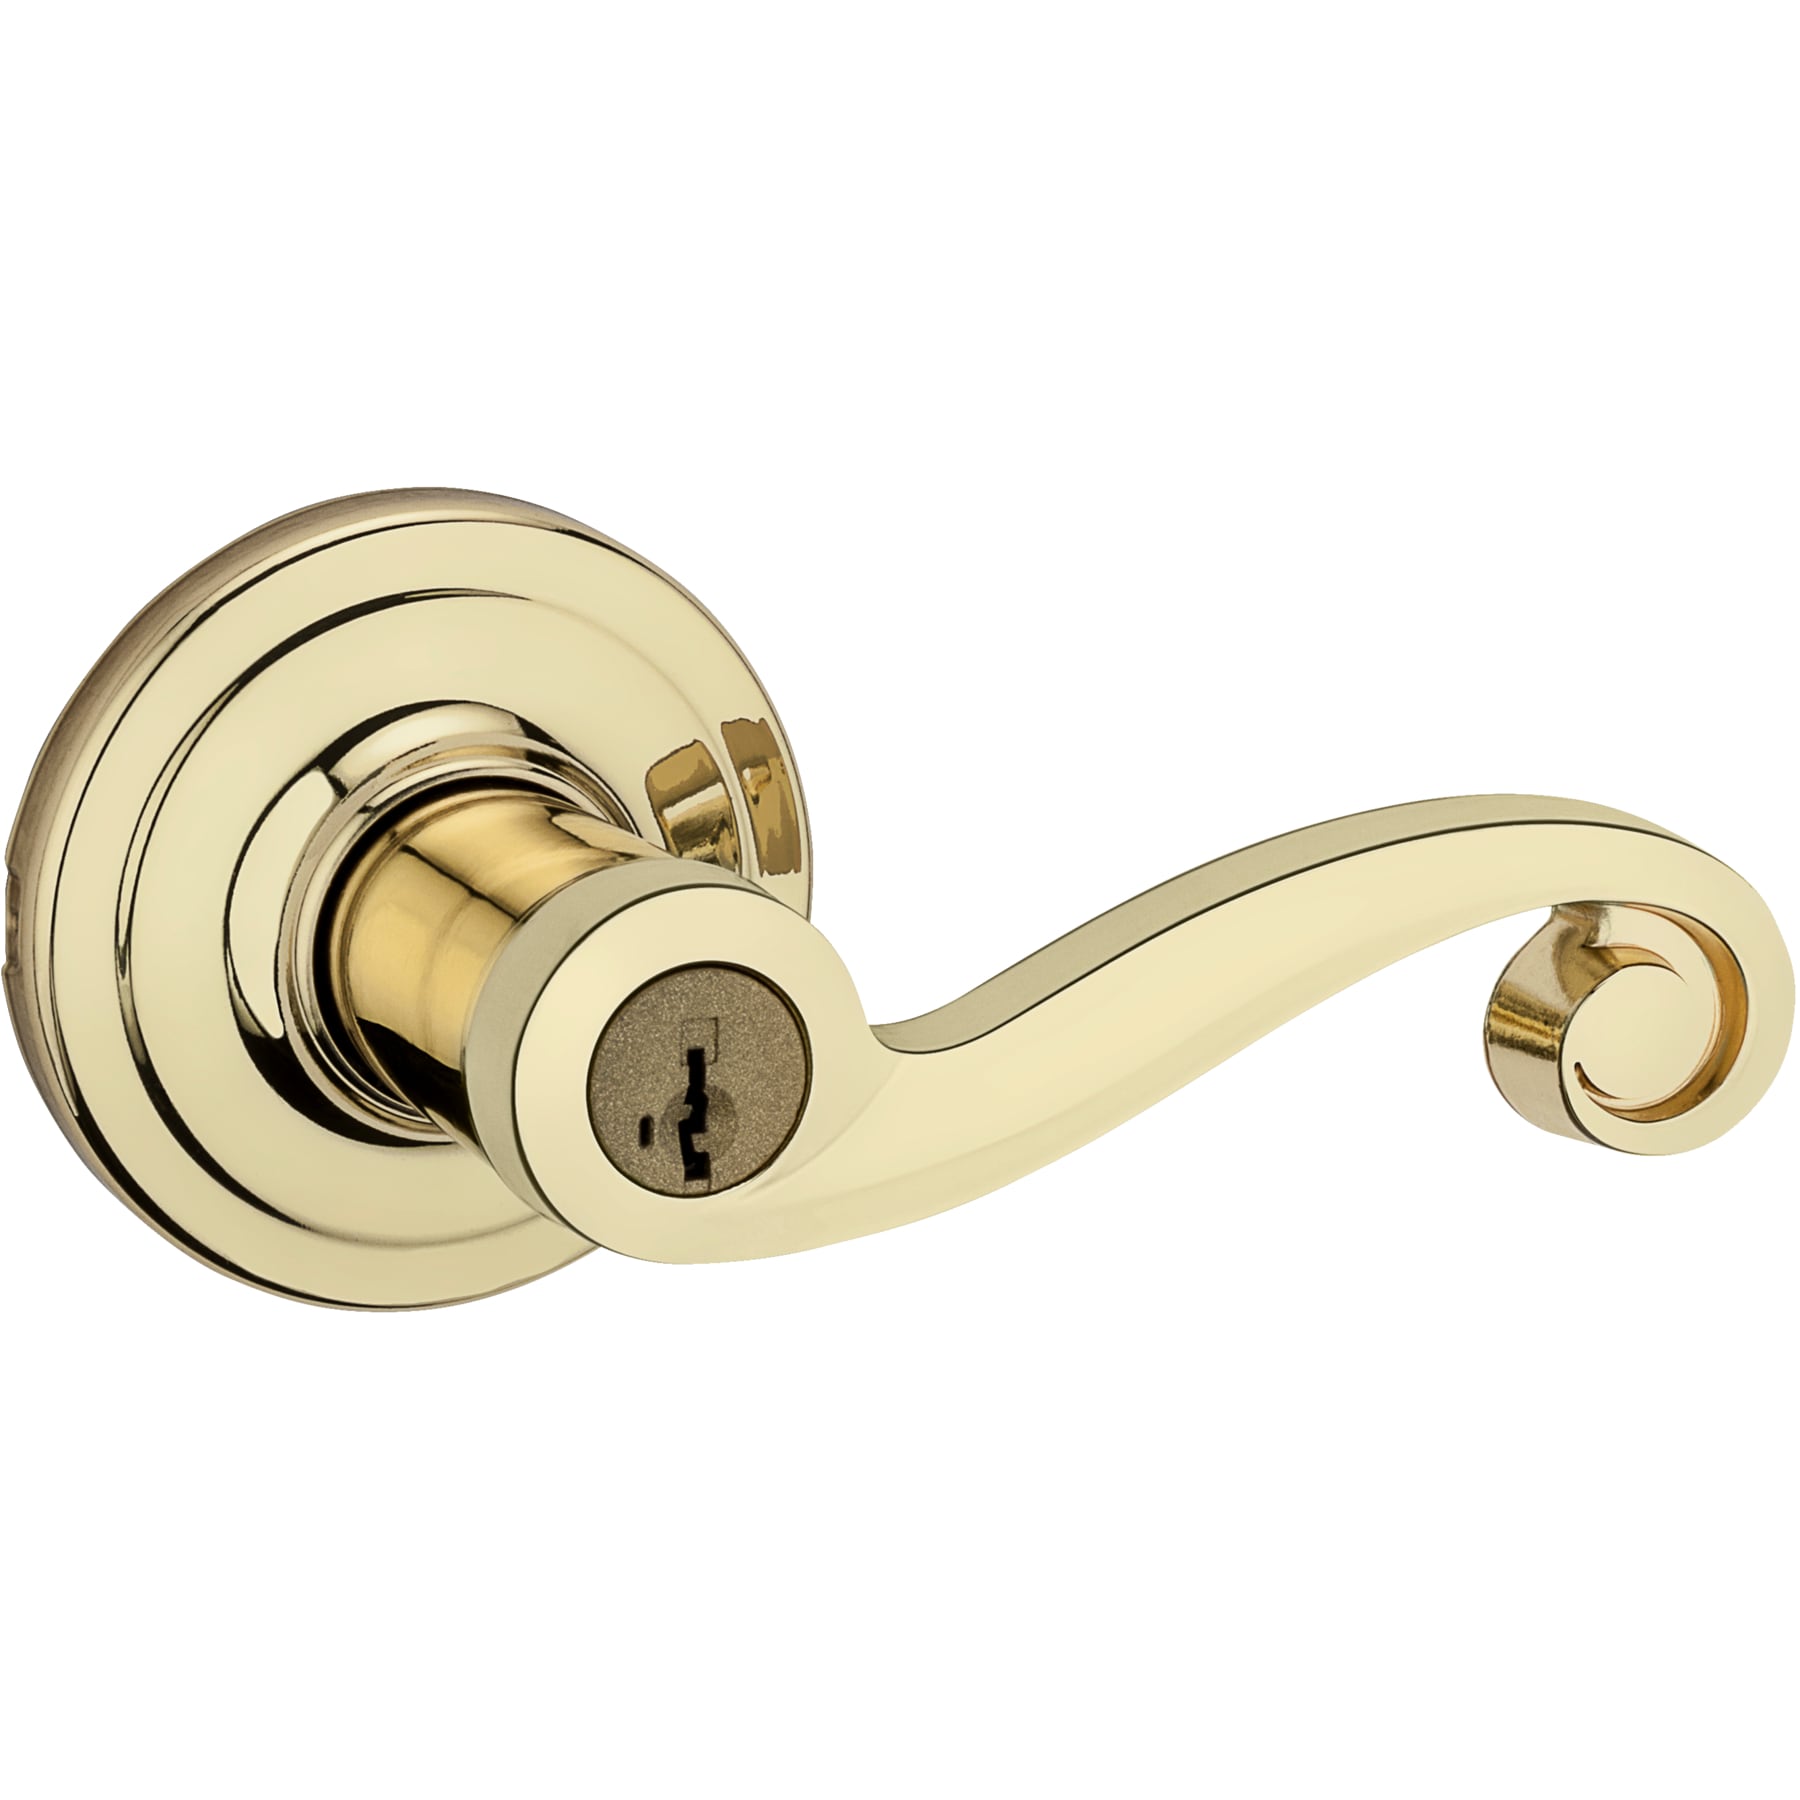 Kwikset Lido Polished Brass Exterior Keyed Entry Door Handle with Smartkey